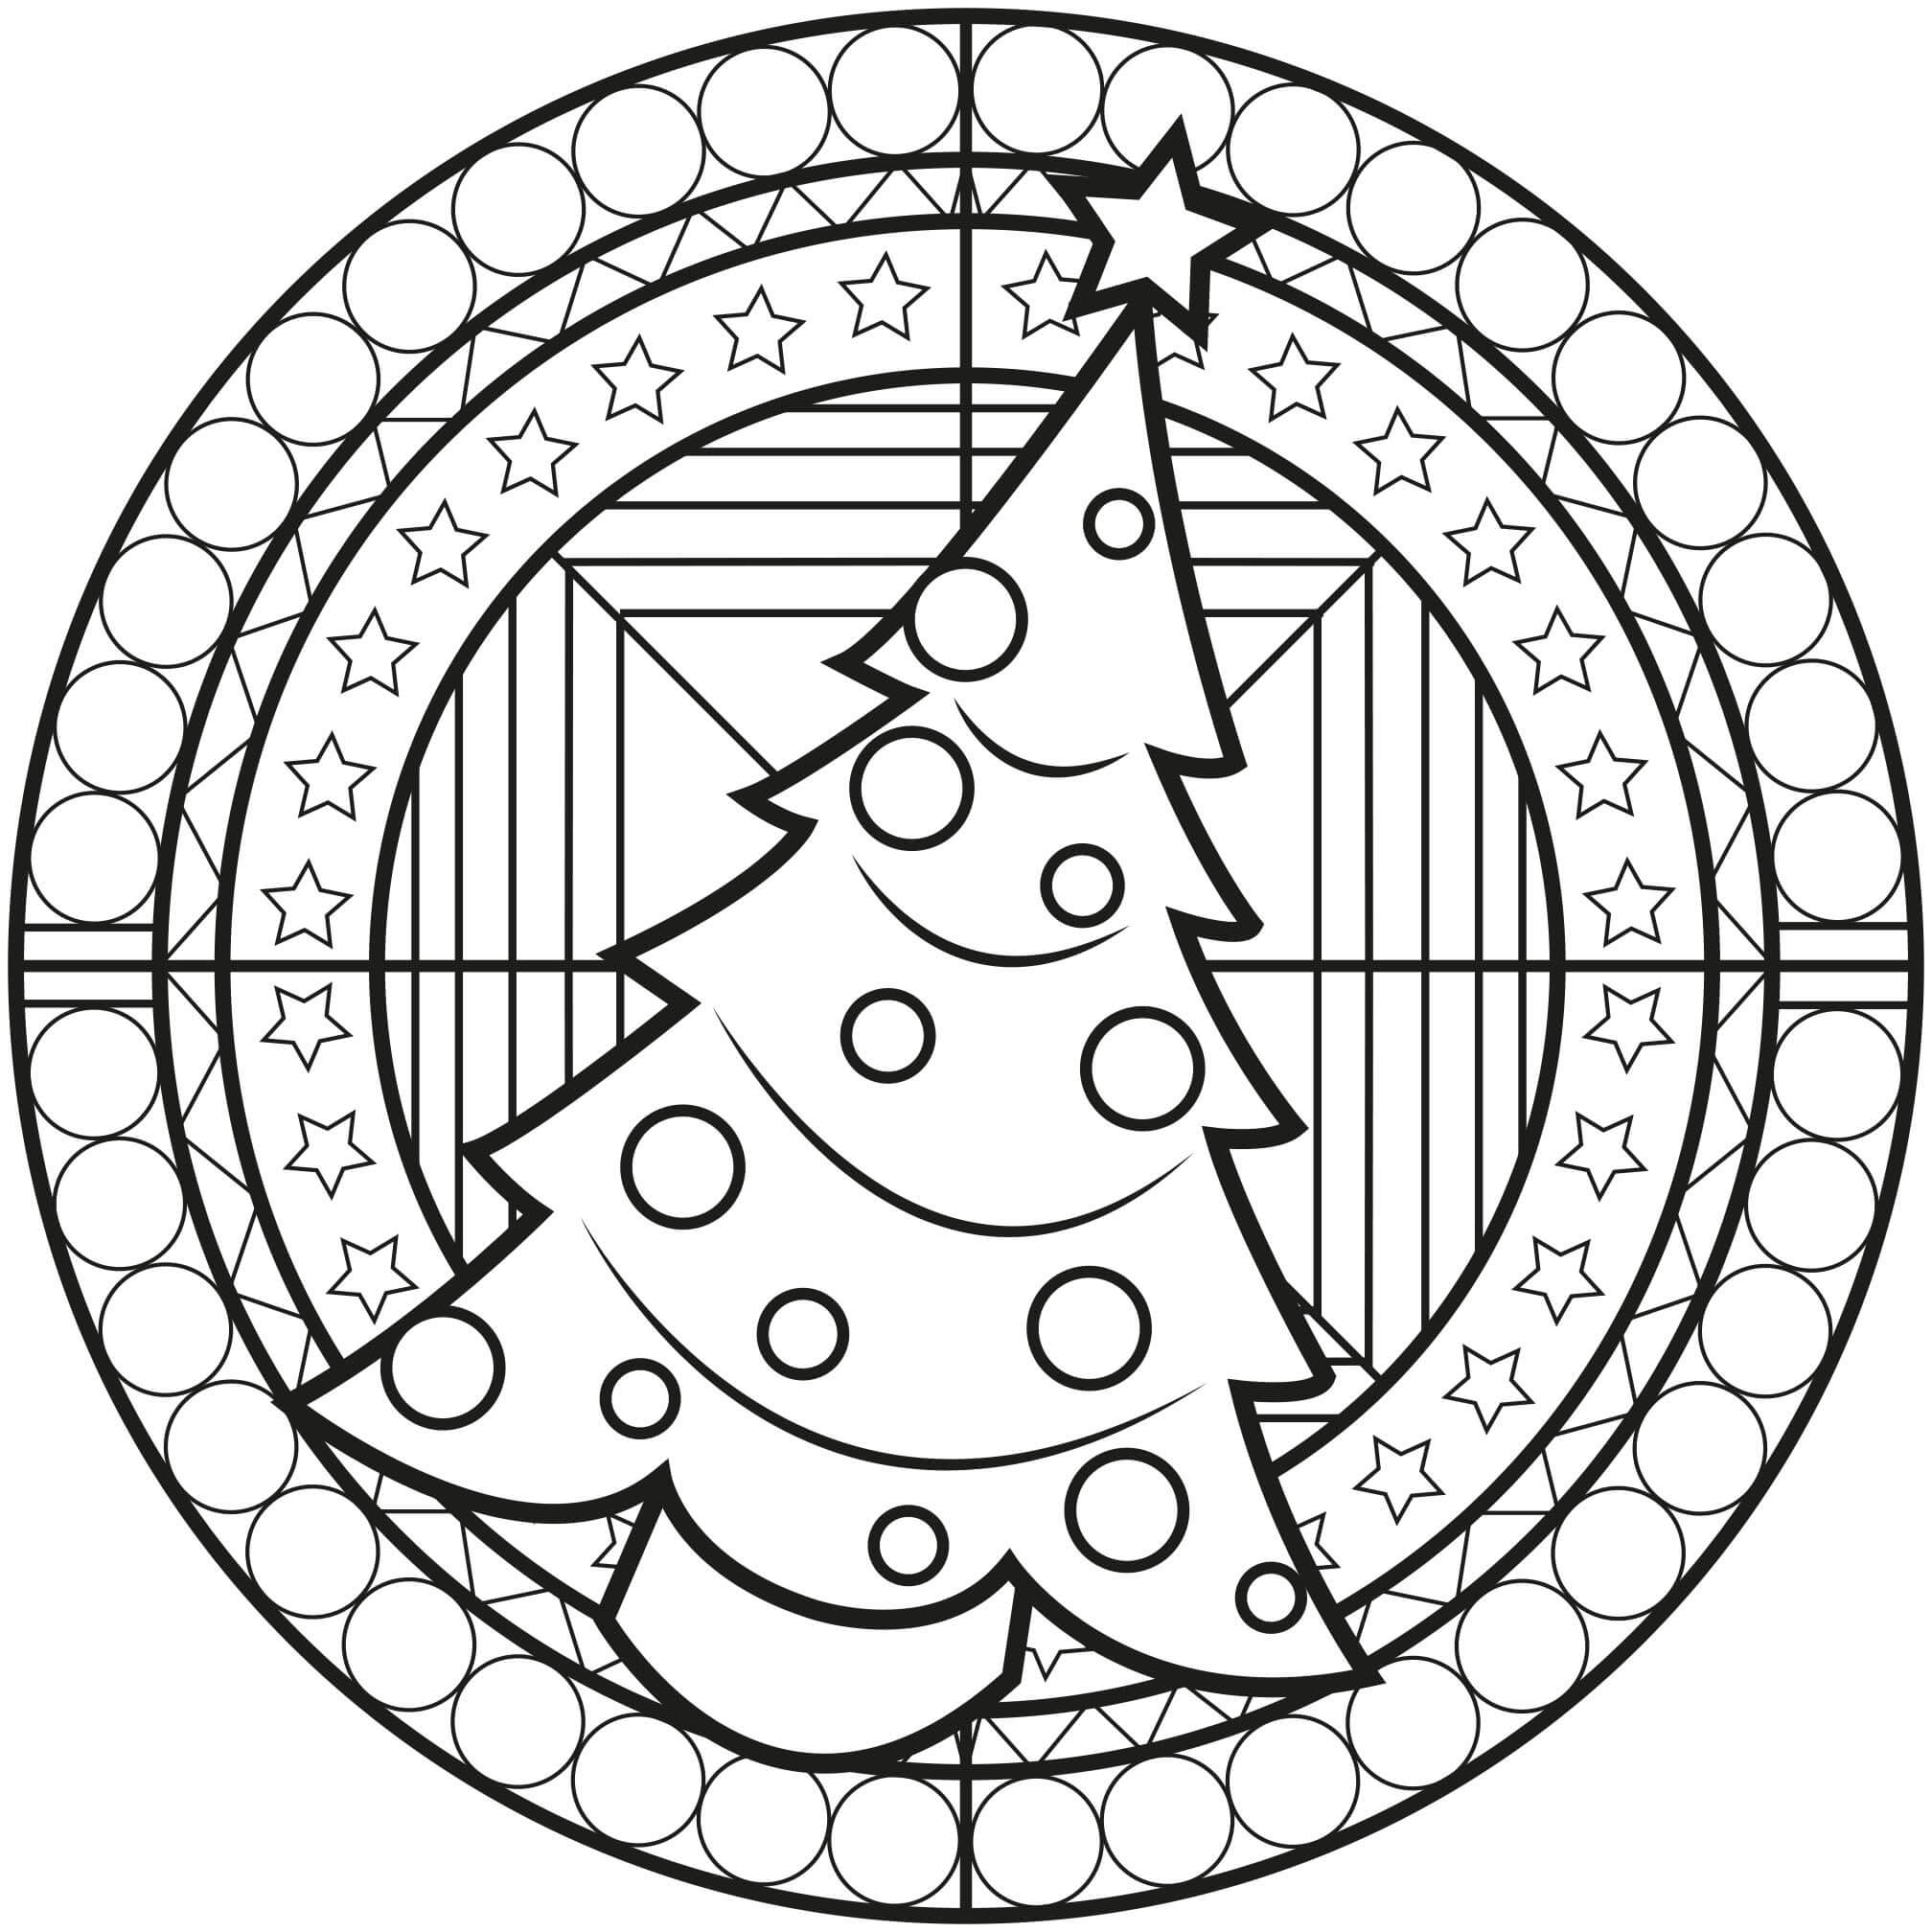 Mandala Christmas Tree Coloring Page – Sheet 2 Mandala